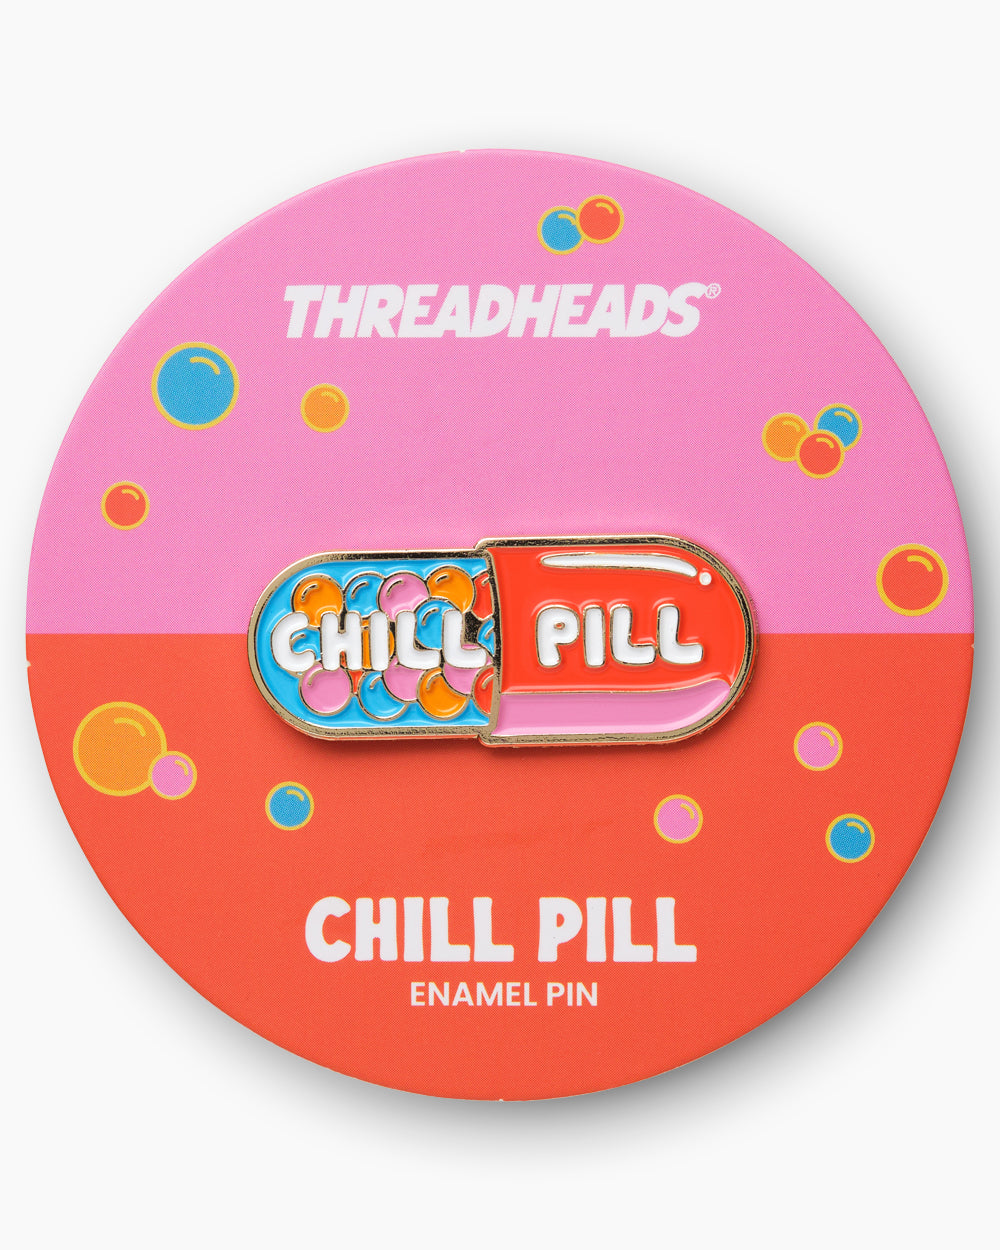 Chill pill Enamel Pin | Threadheads Exclusive